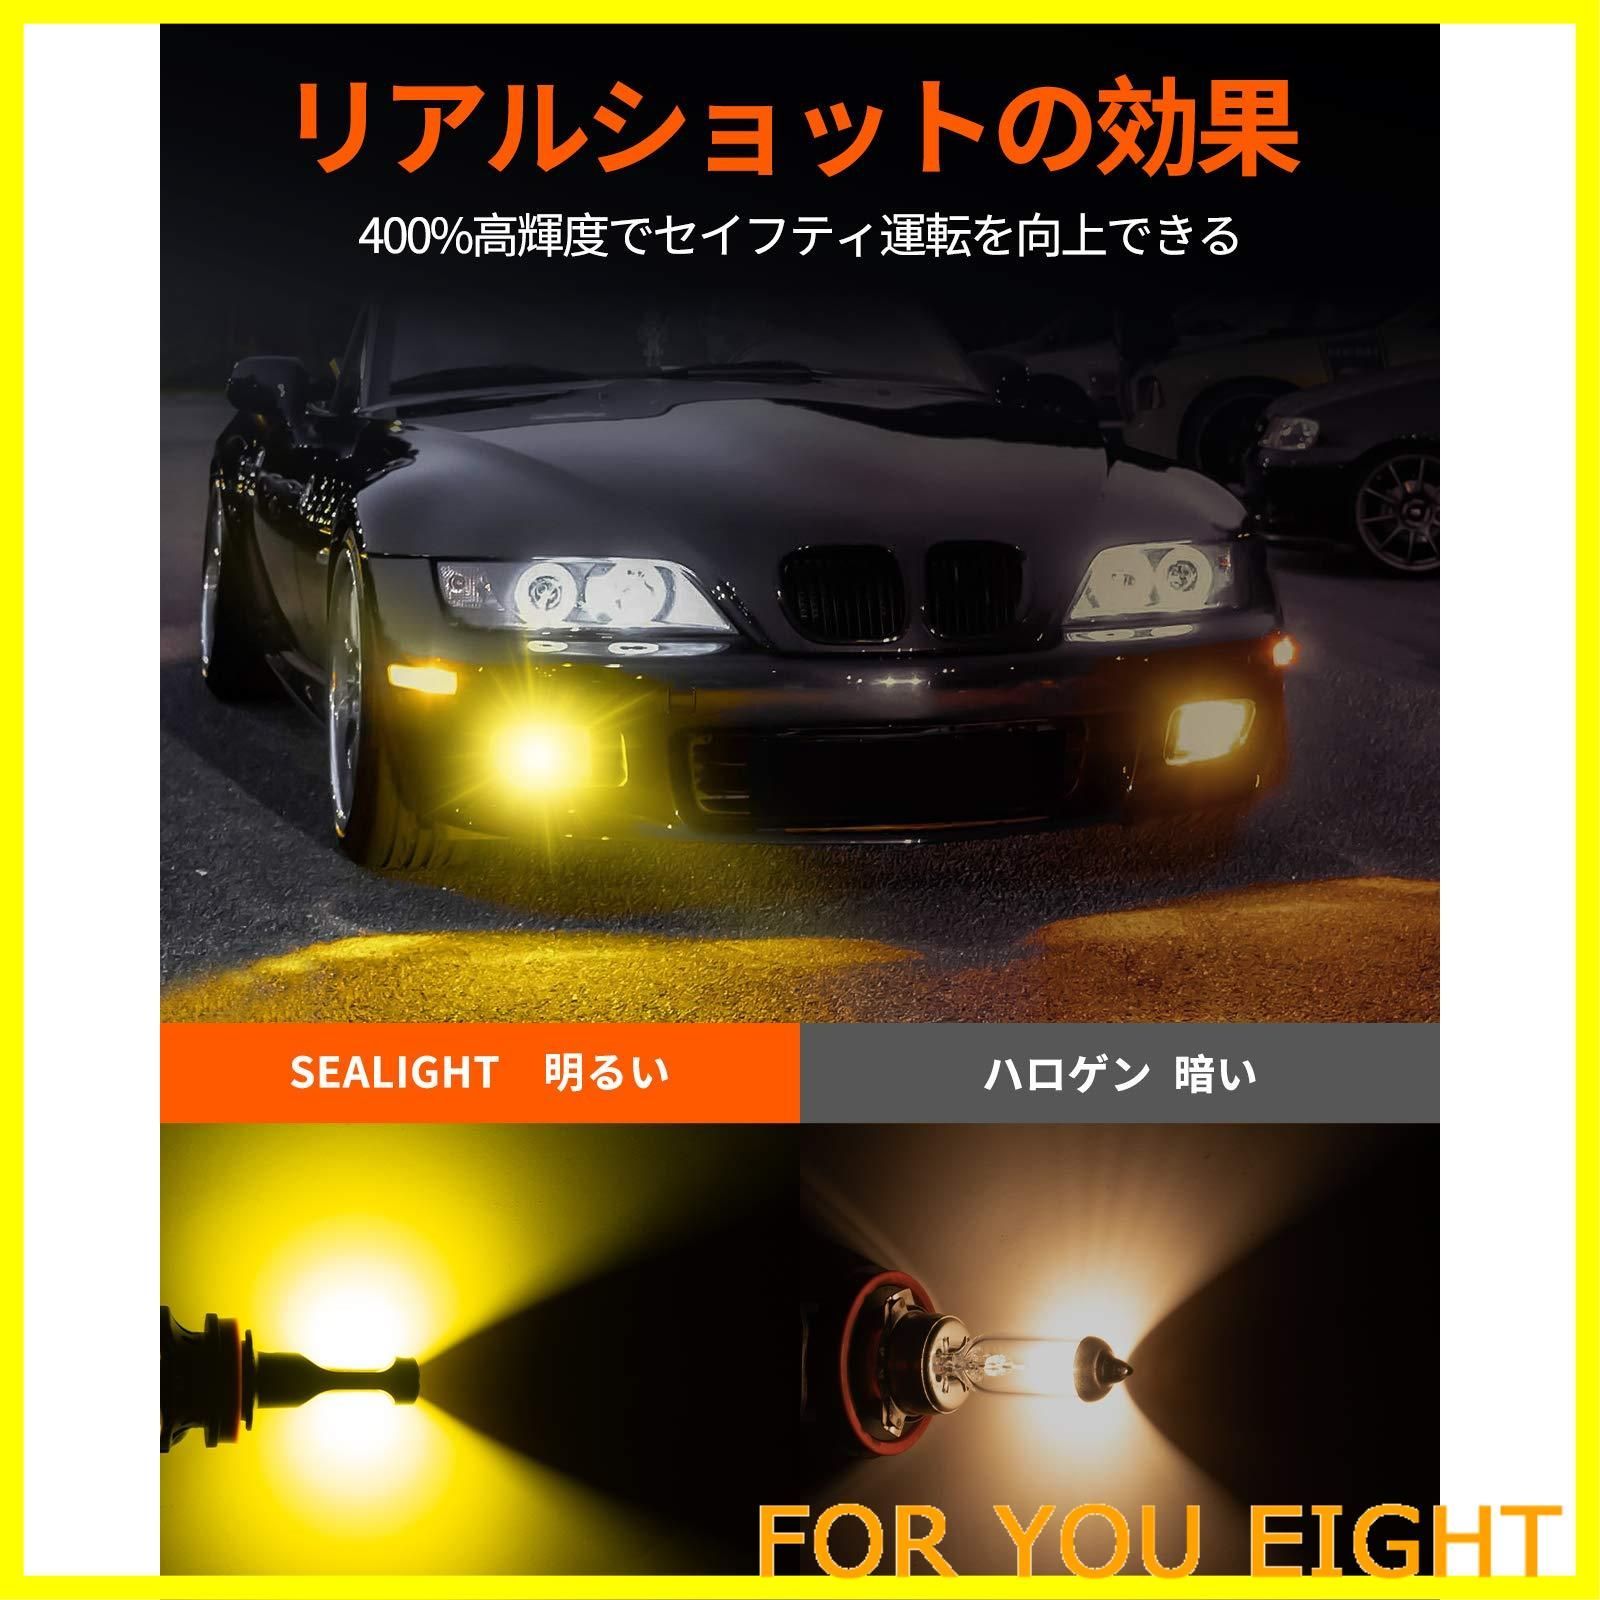 SEALIGHT LEDフォグライト - パーツ